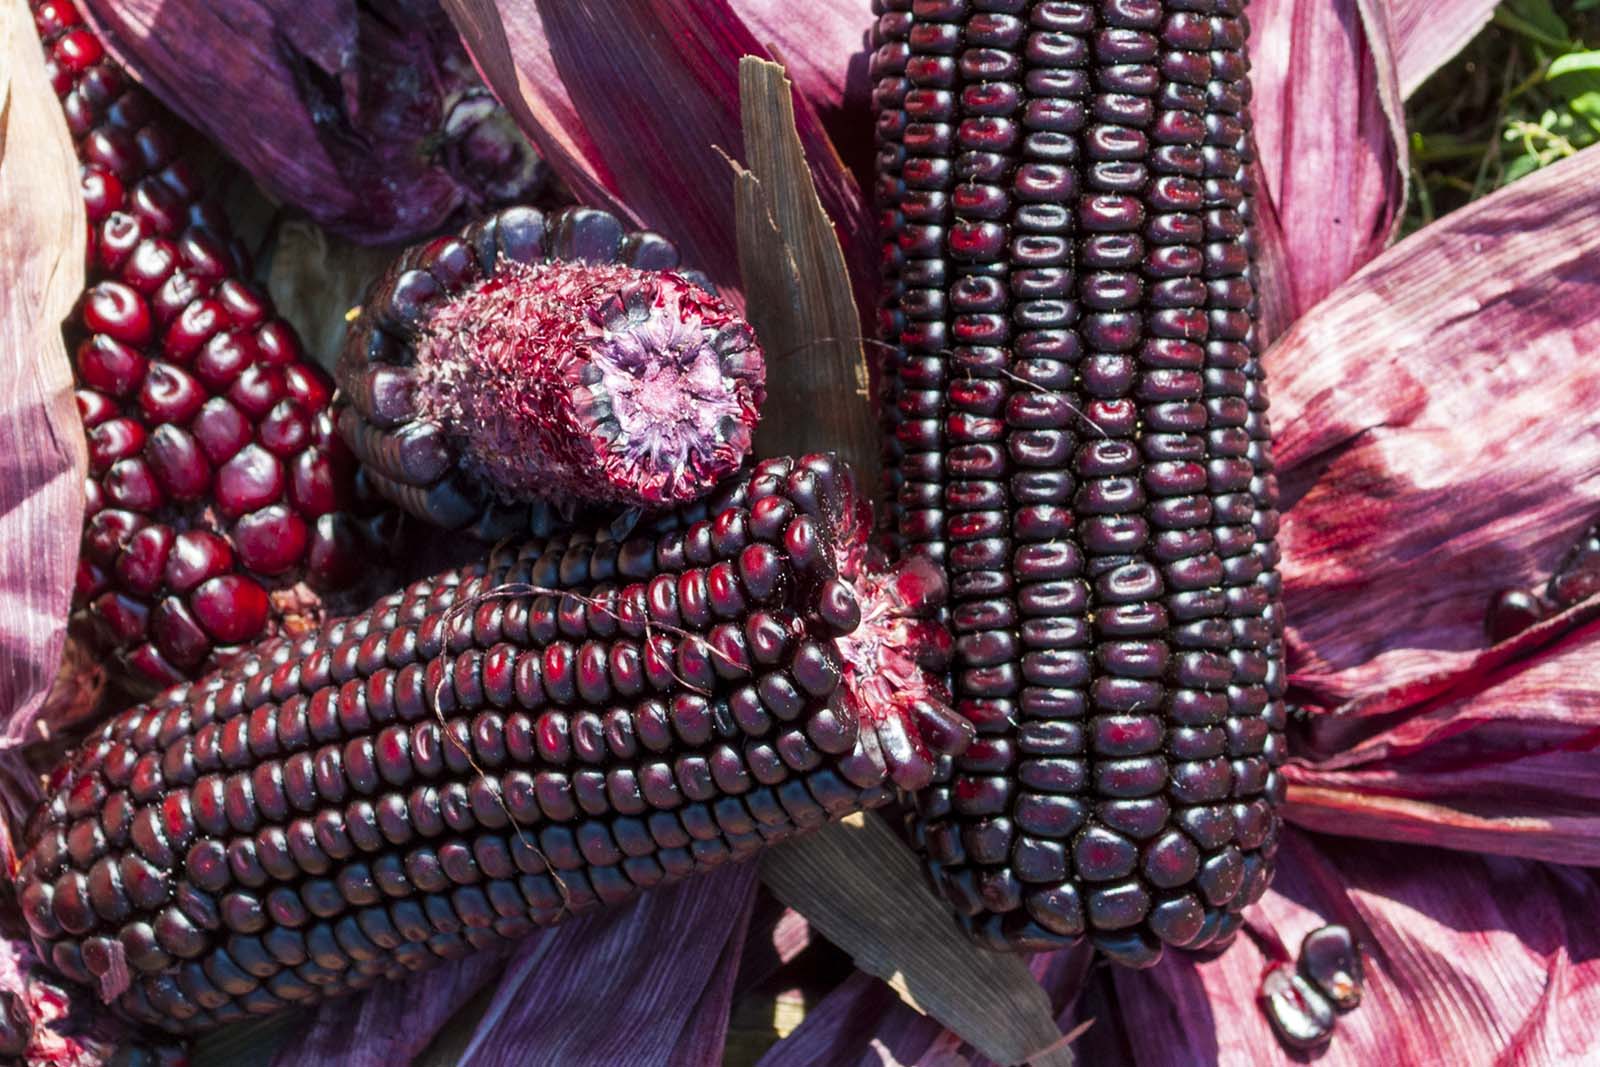 Italian Purple corn